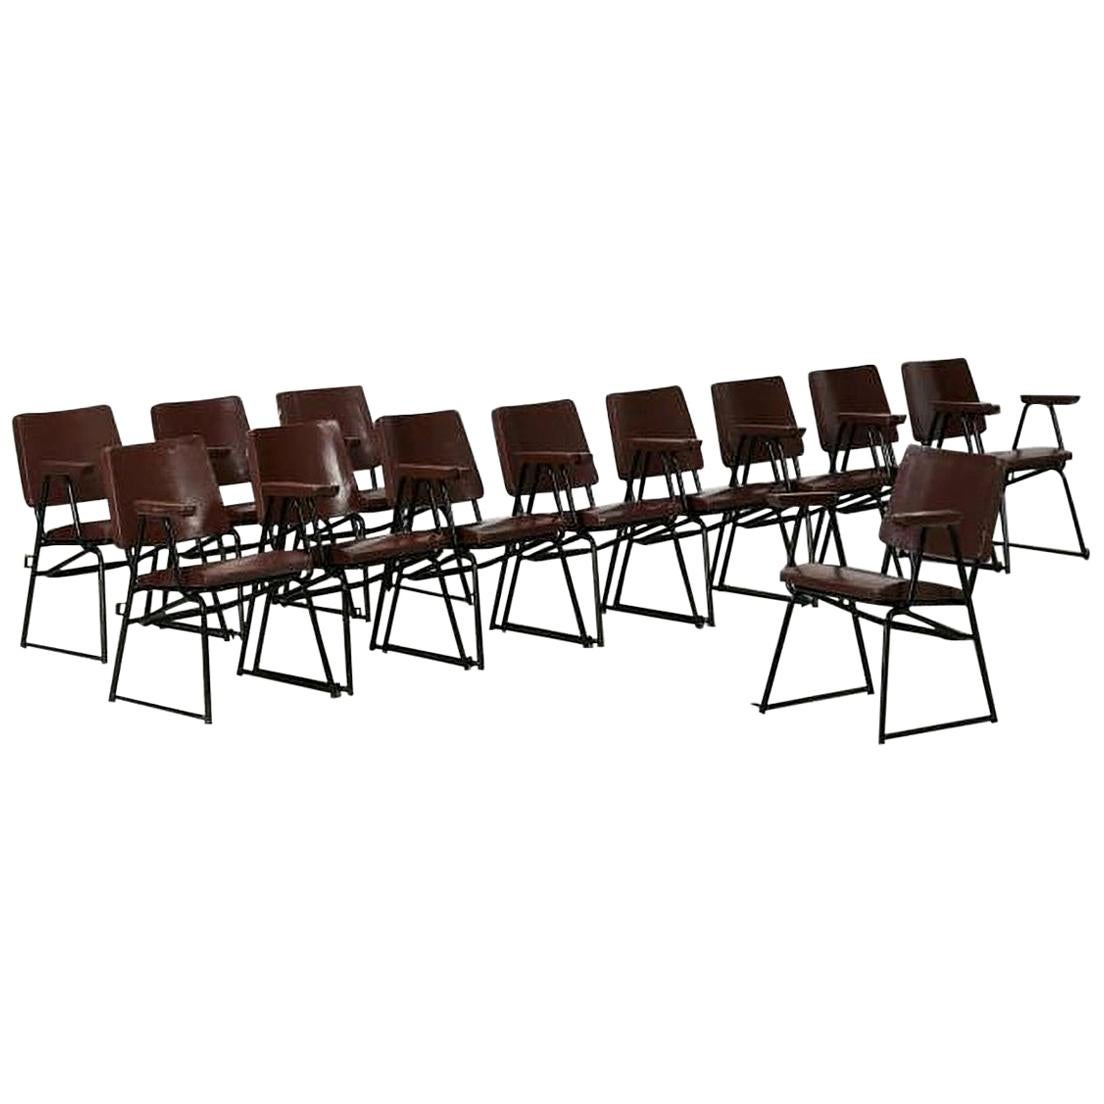 B.B.P.R. Studio Style 12 Chairs Mid-Century Modern Curved Wood Steel